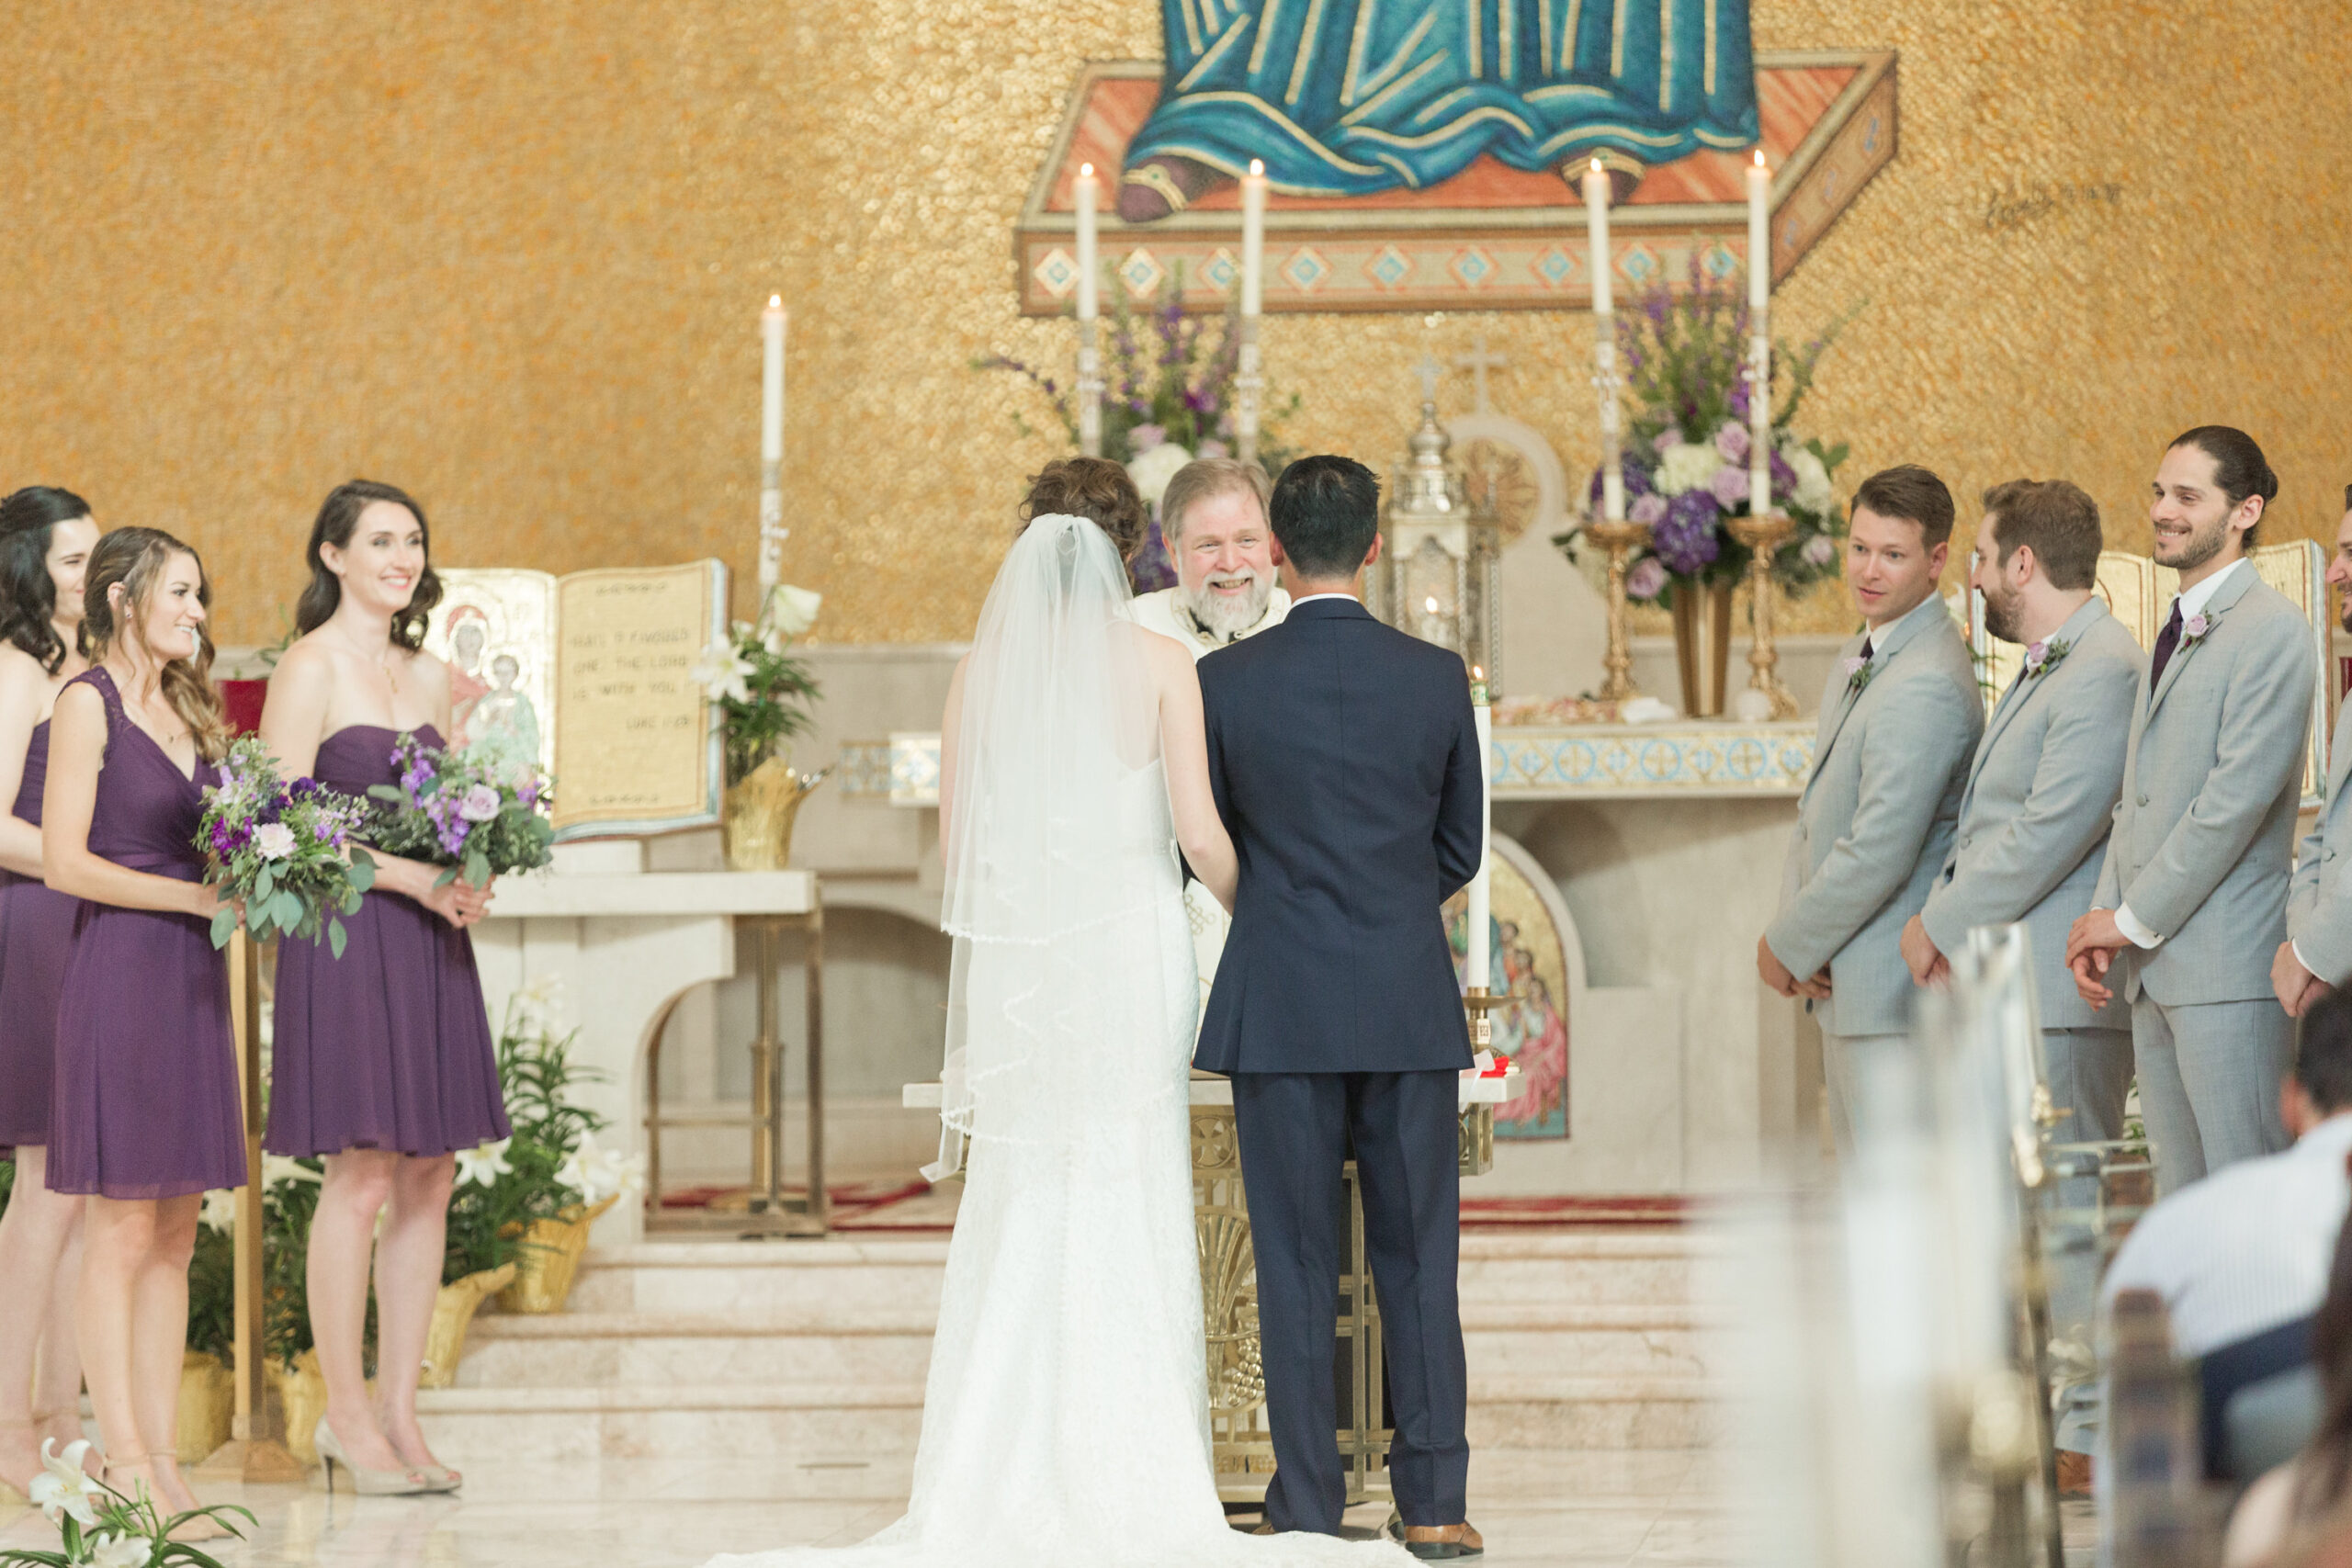 The Sacrament of Marriage – Saint Paul’s Greek Orthodox Church